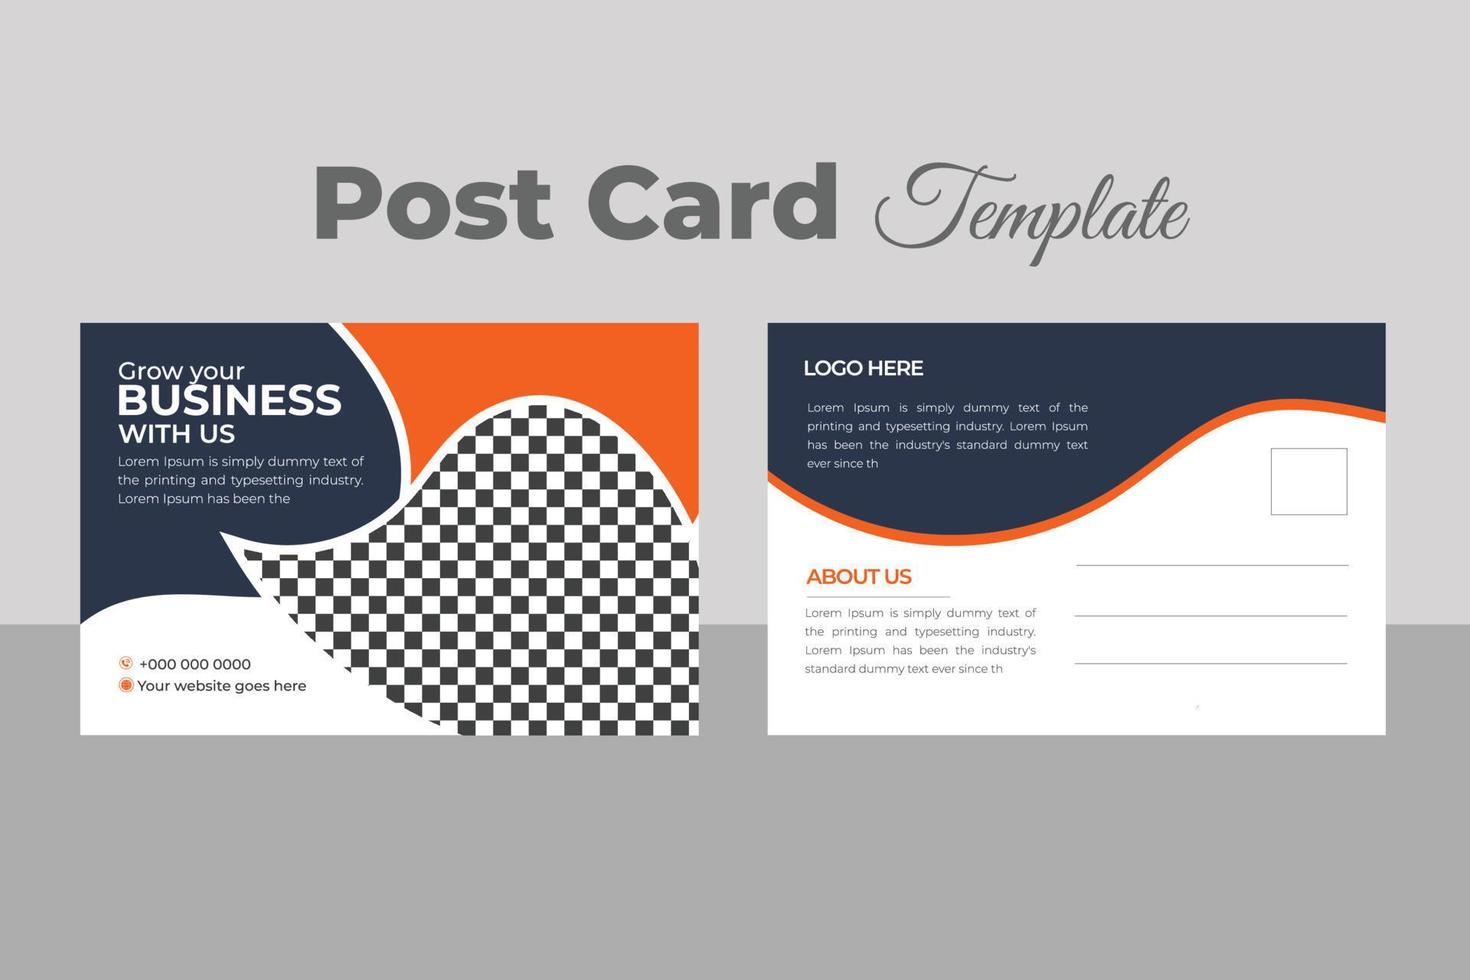 Business Postcard Template Design vector